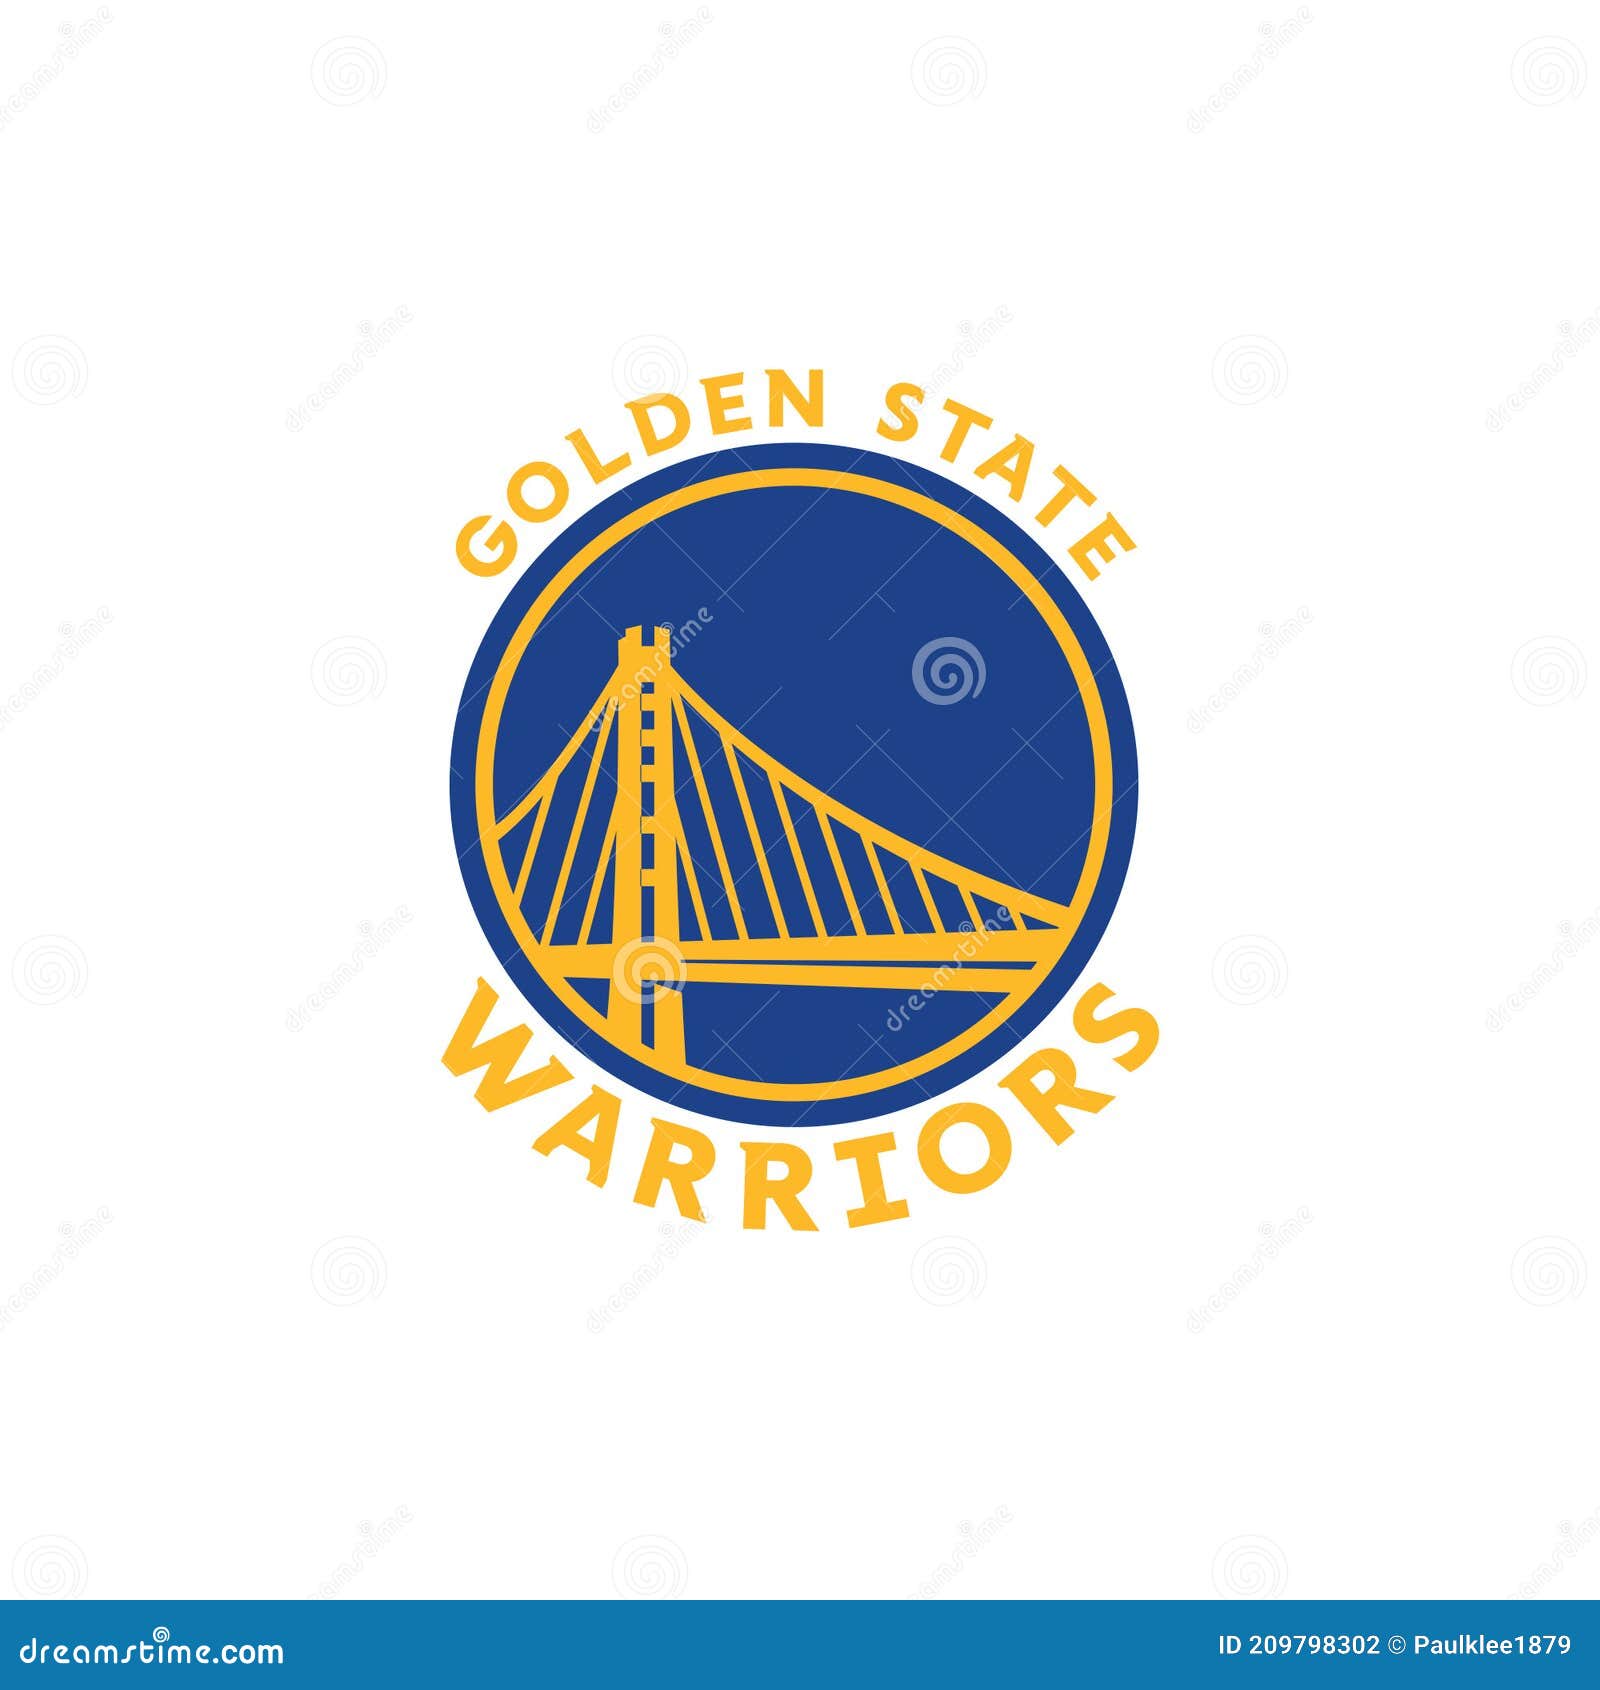 Golden State Warriors  Abstract Design  Logo Wallpaper Download  MobCup